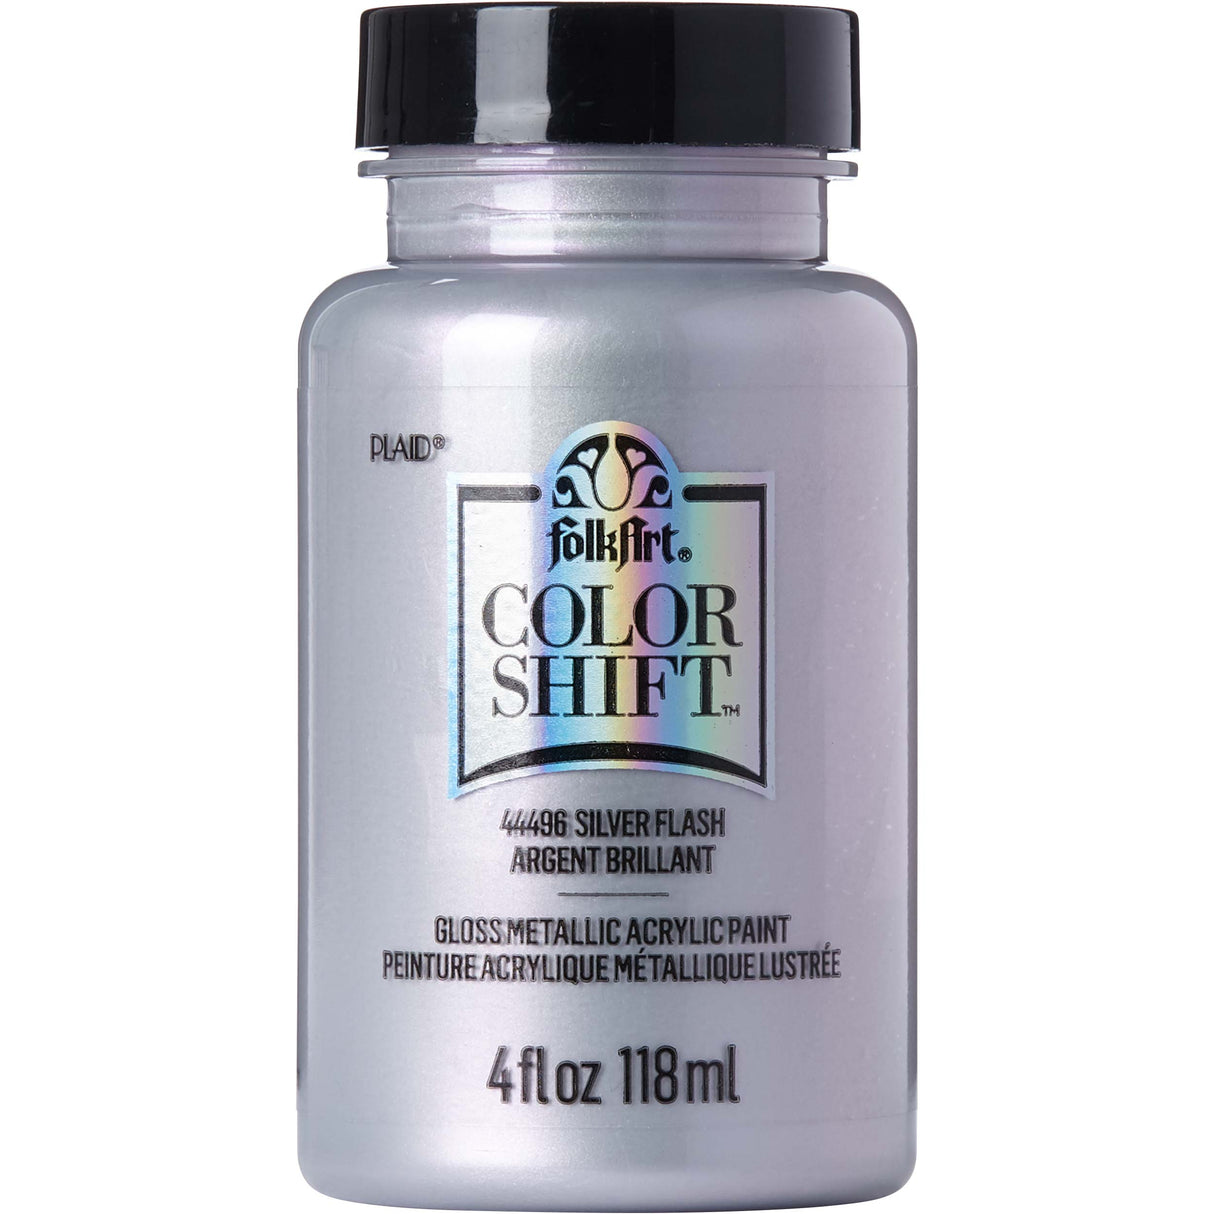 Color Shift Acrylic Paint - Silver Flash